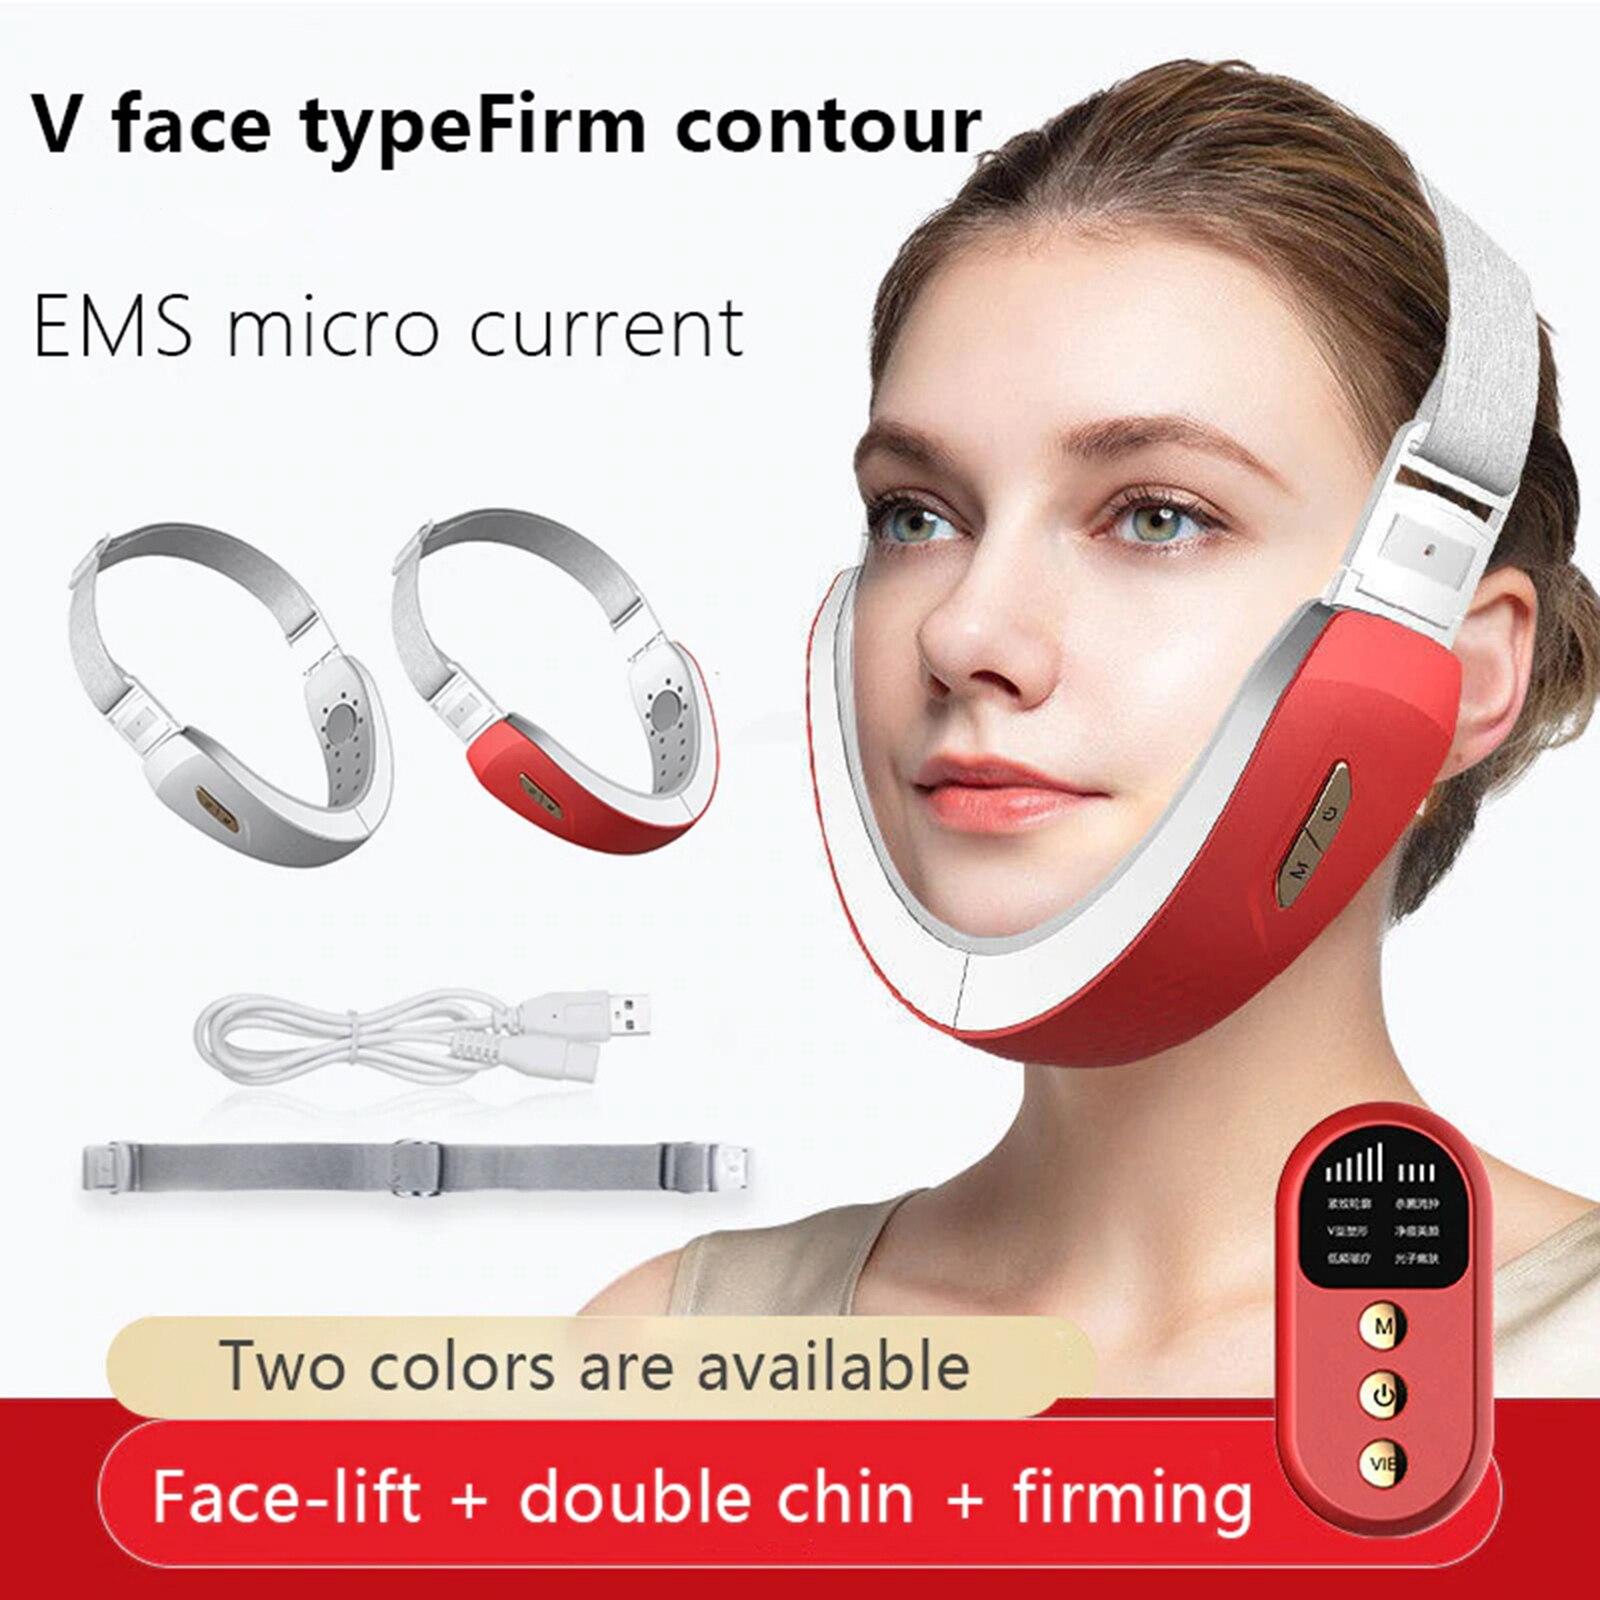 Vibration Massage Jawline Shaper Smart Remote Control Bluetooth Face Chin Slimming Device CJ